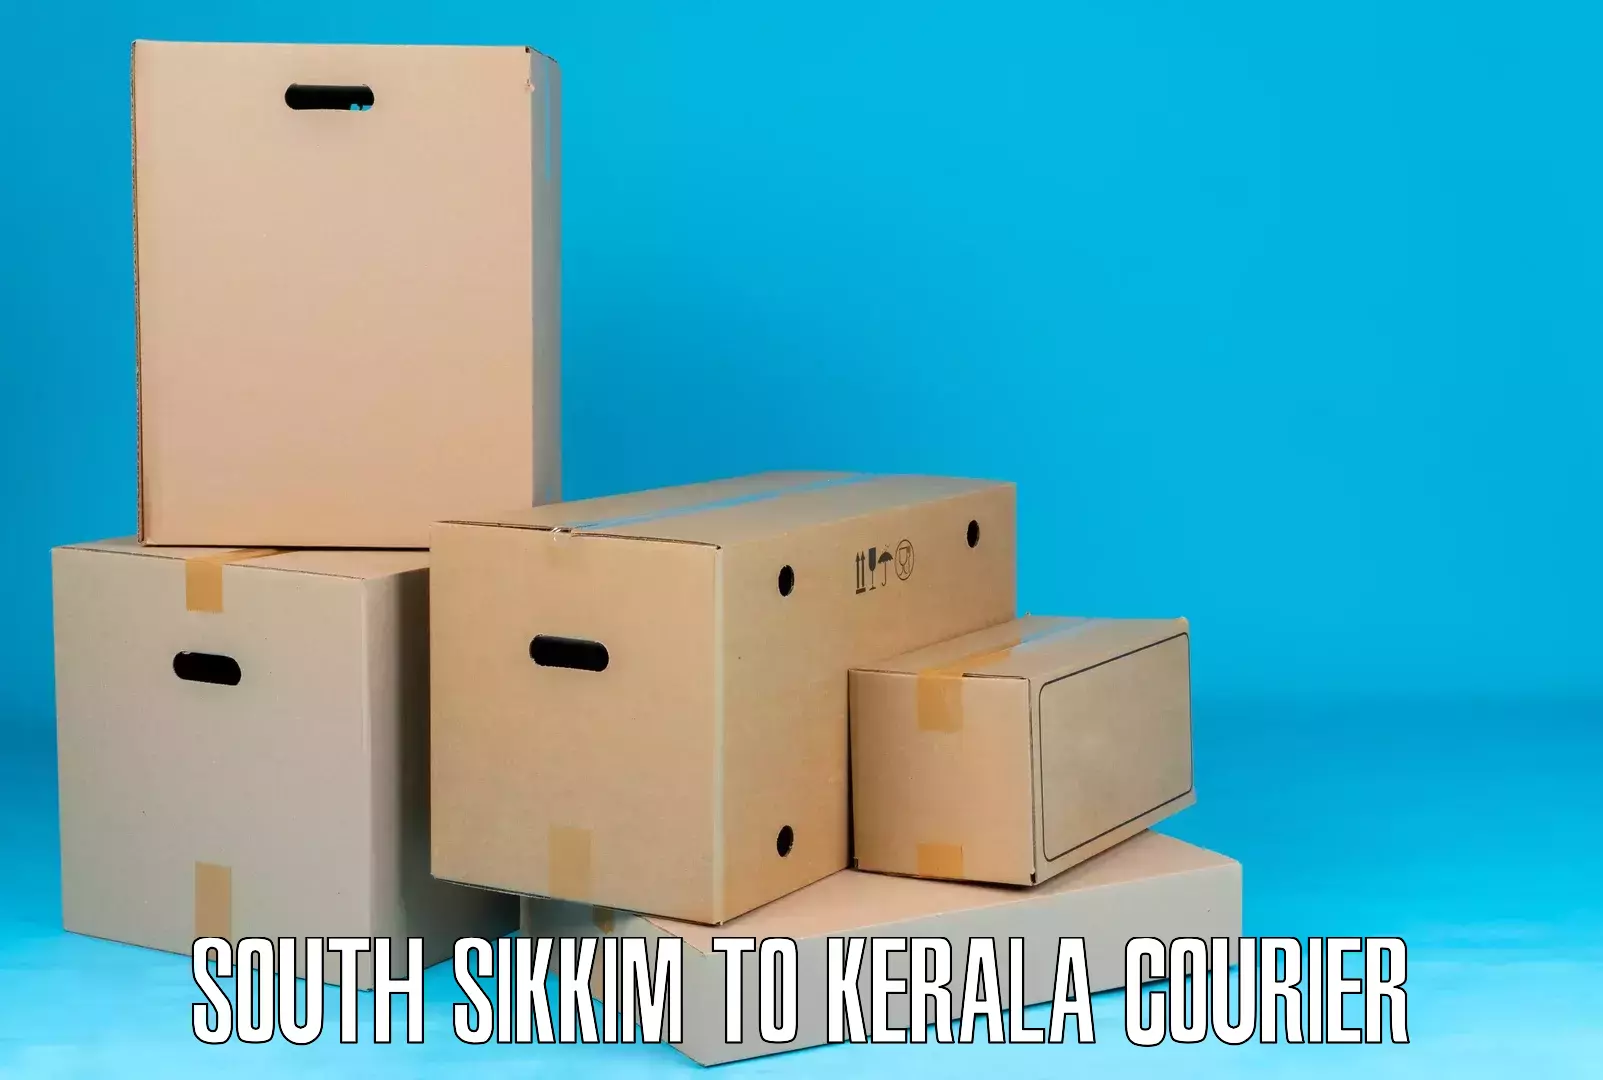 Express logistics providers South Sikkim to Thiruvananthapuram